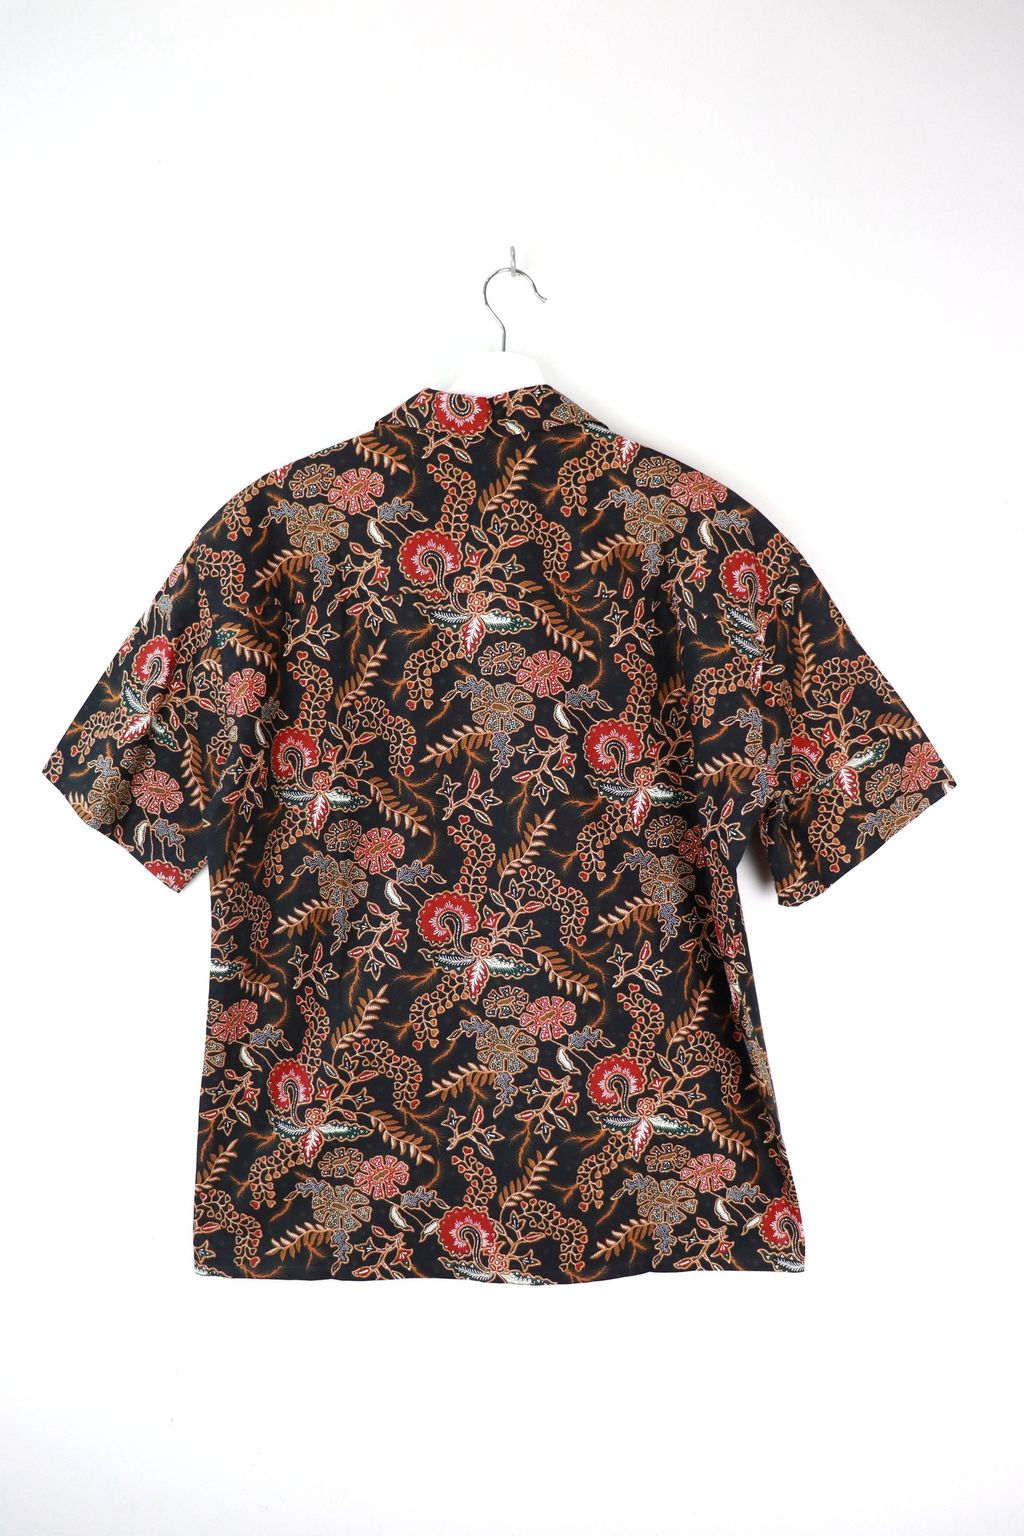 kanoemen-open-collared-batik-shirt-36